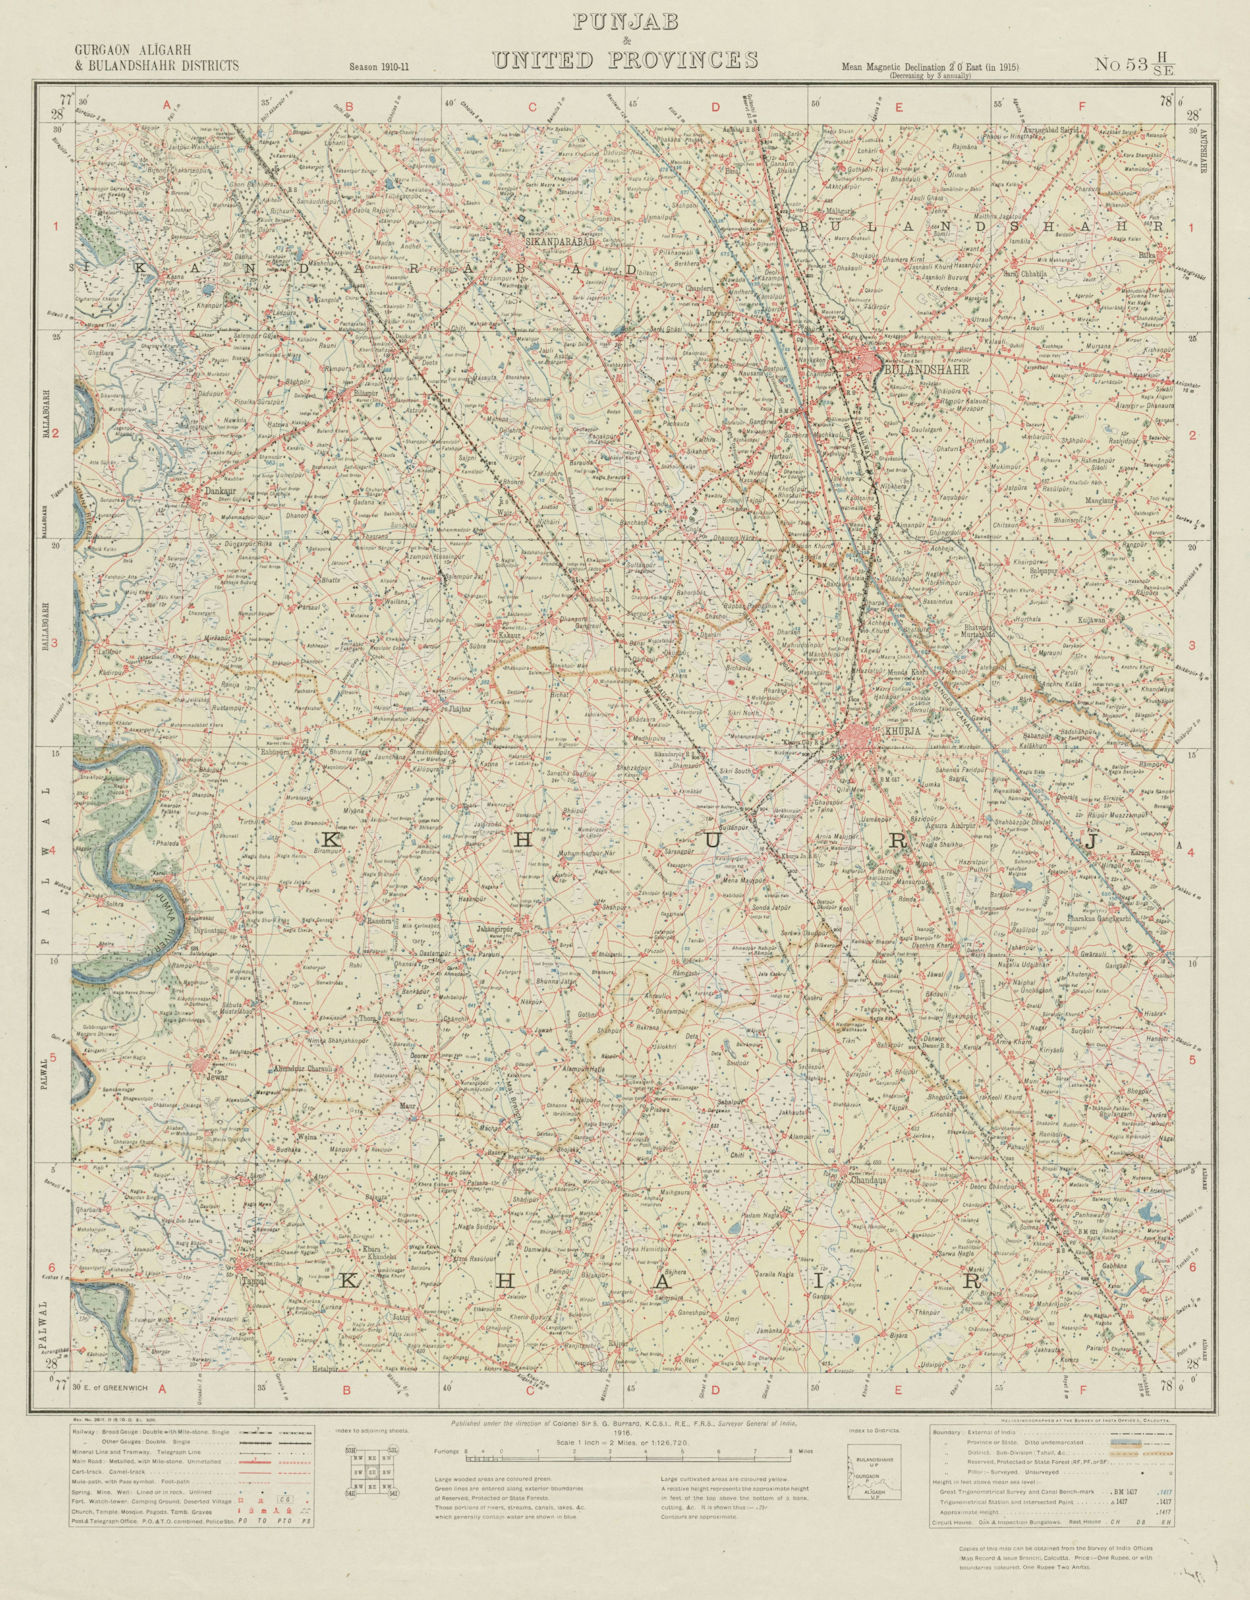 SURVEY OF INDIA 53 H/SE Uttar Pradesh Bulandshahr Khurja Noida Delhi 1916 map